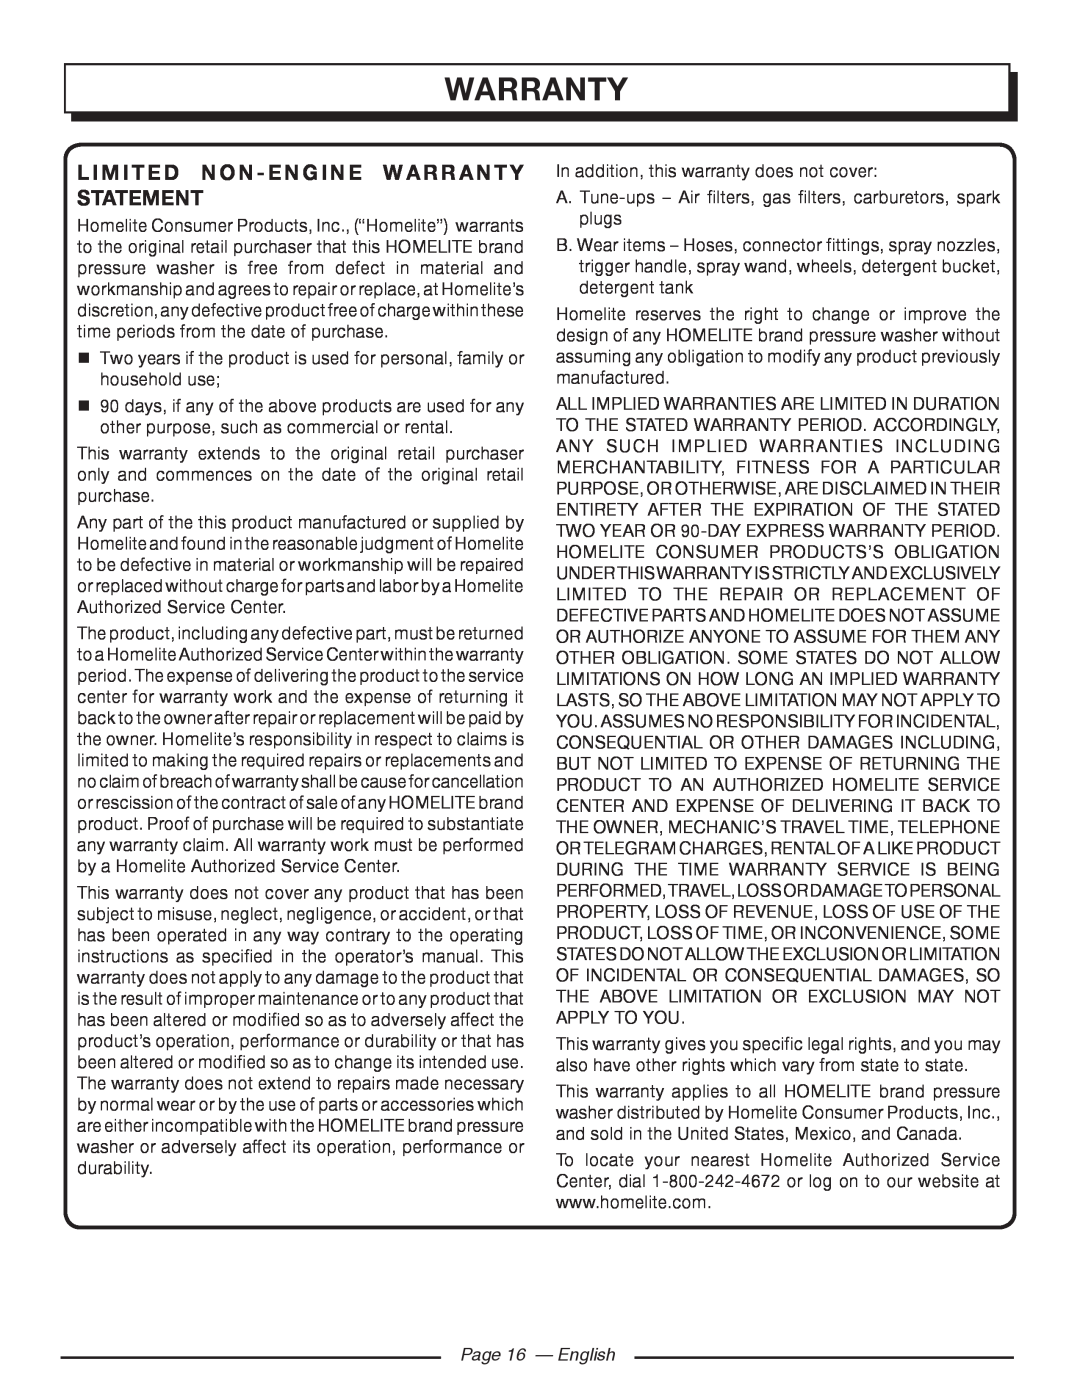 Homelite UT80977, UT80546 manuel dutilisation Limited Non - Engine Warranty Statement, Page 16 - English 